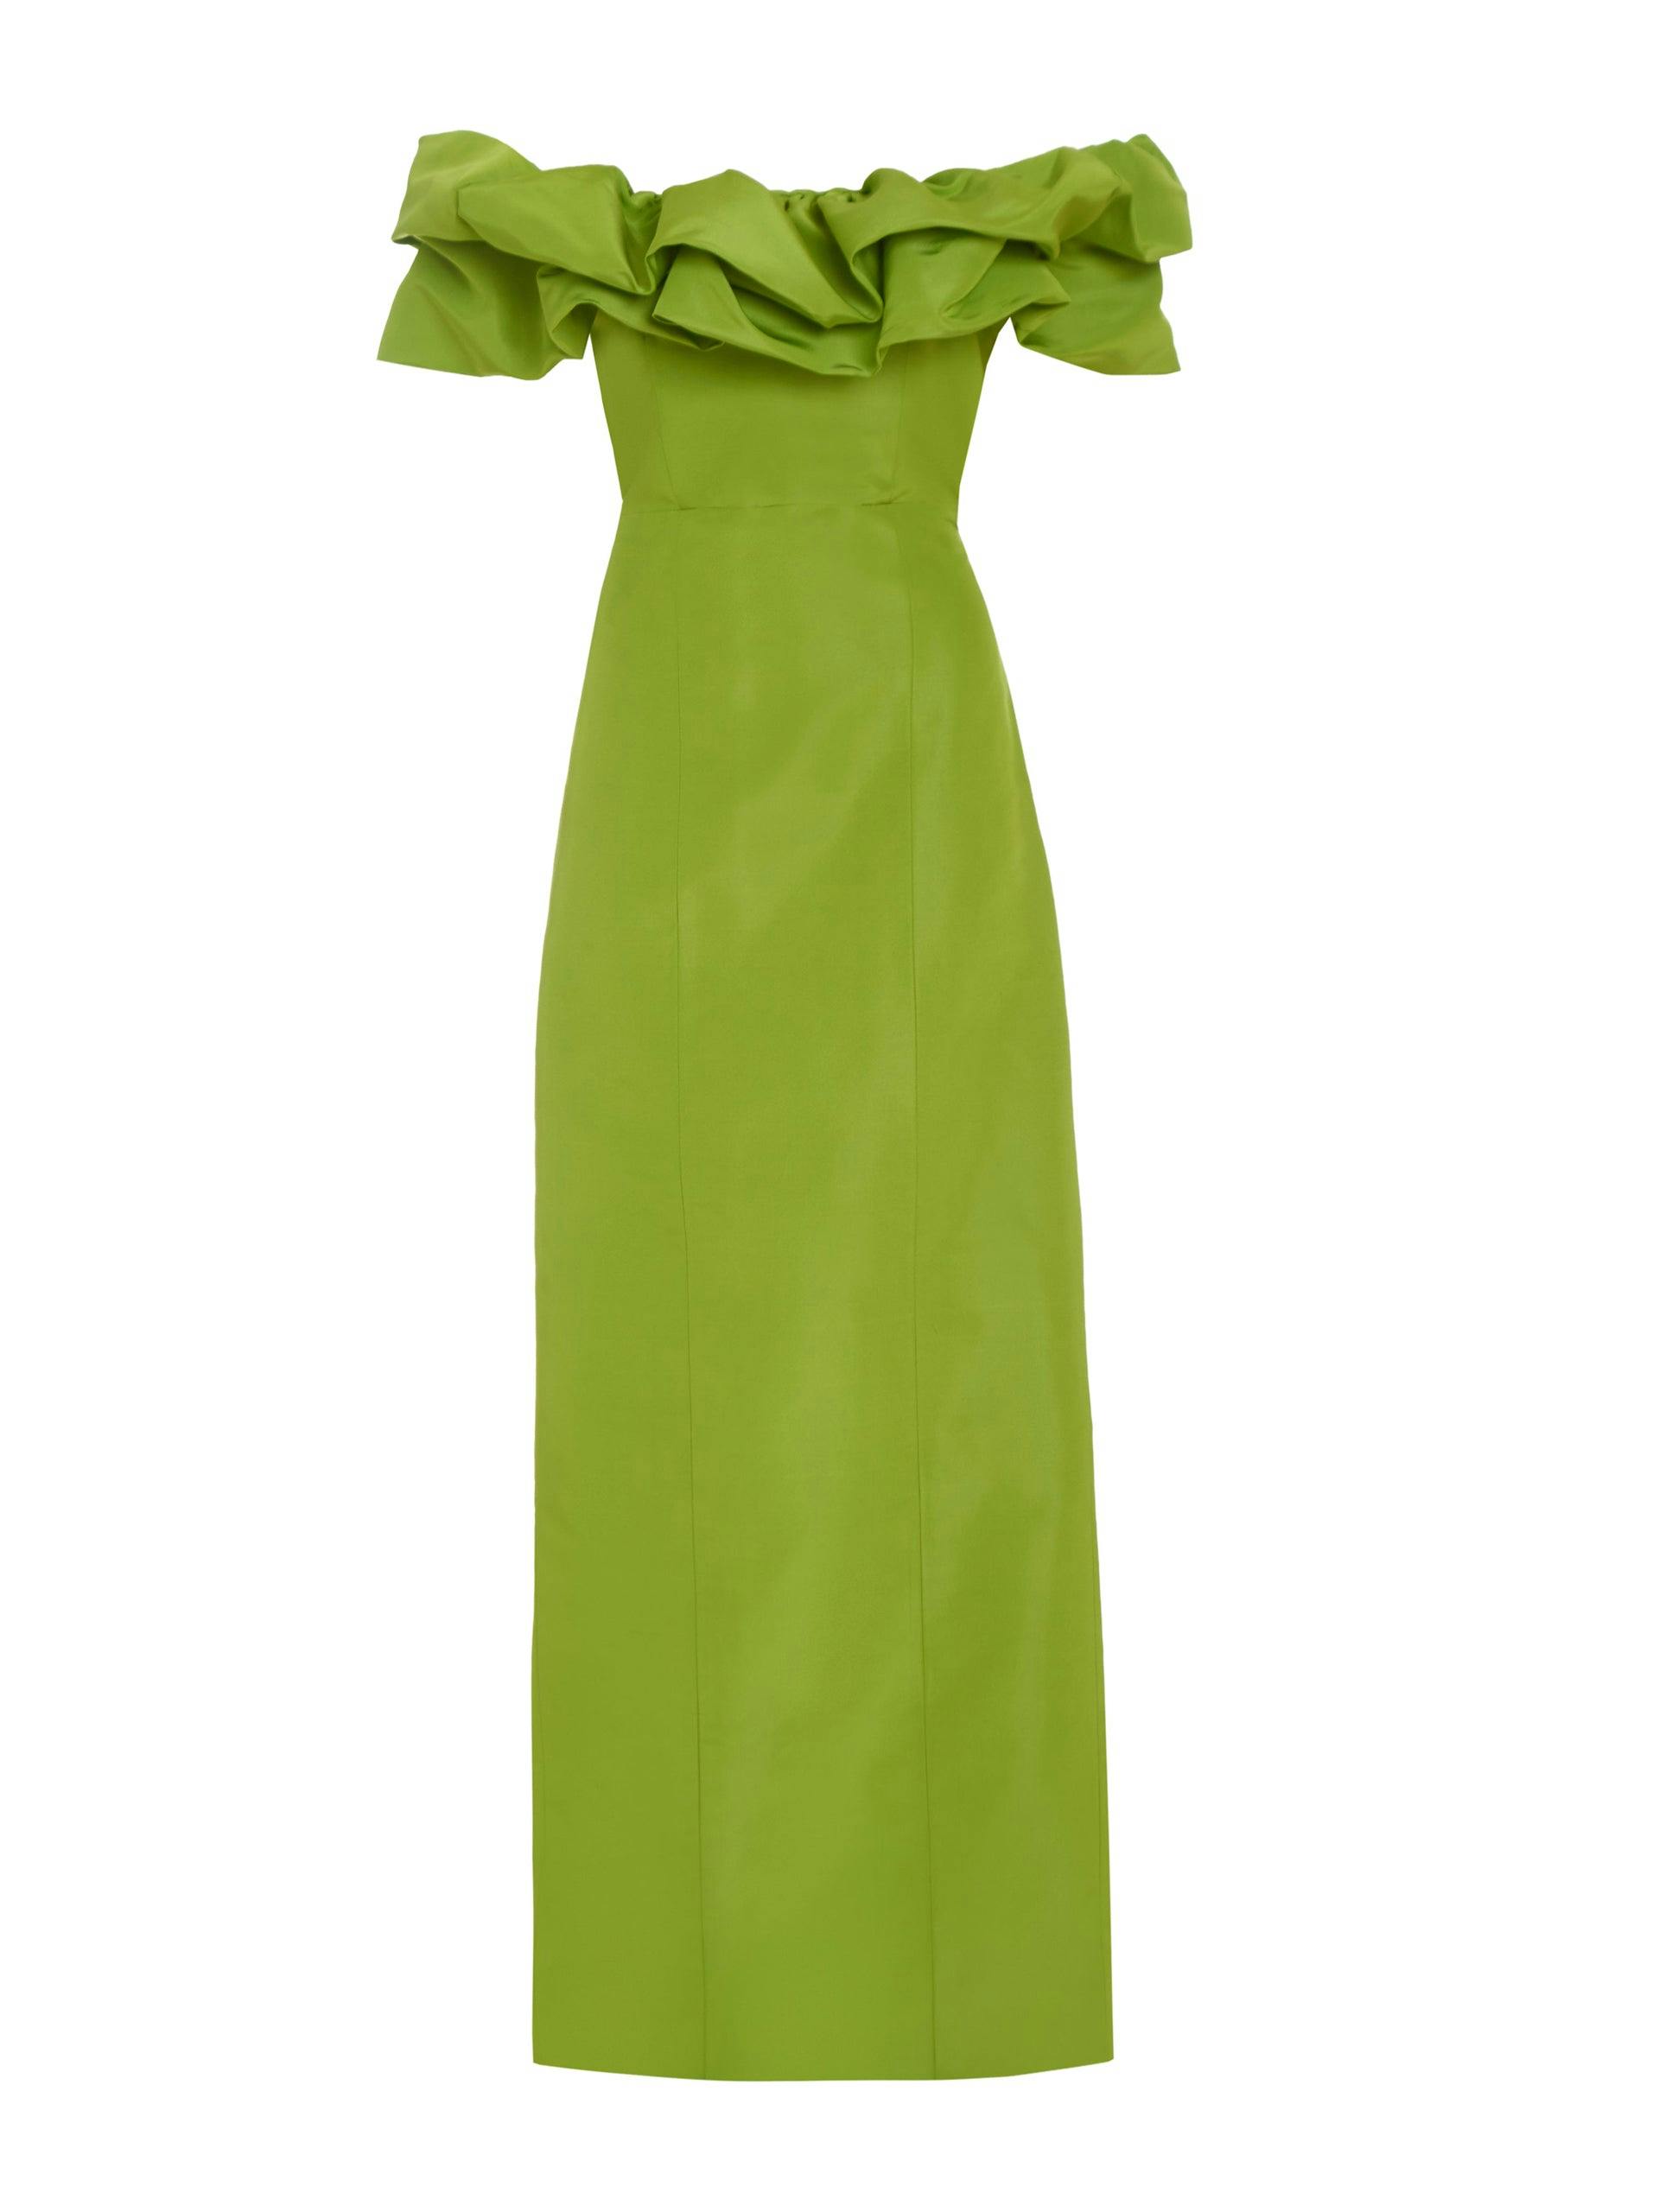 Etta chartreuse silk faille ruffle gown